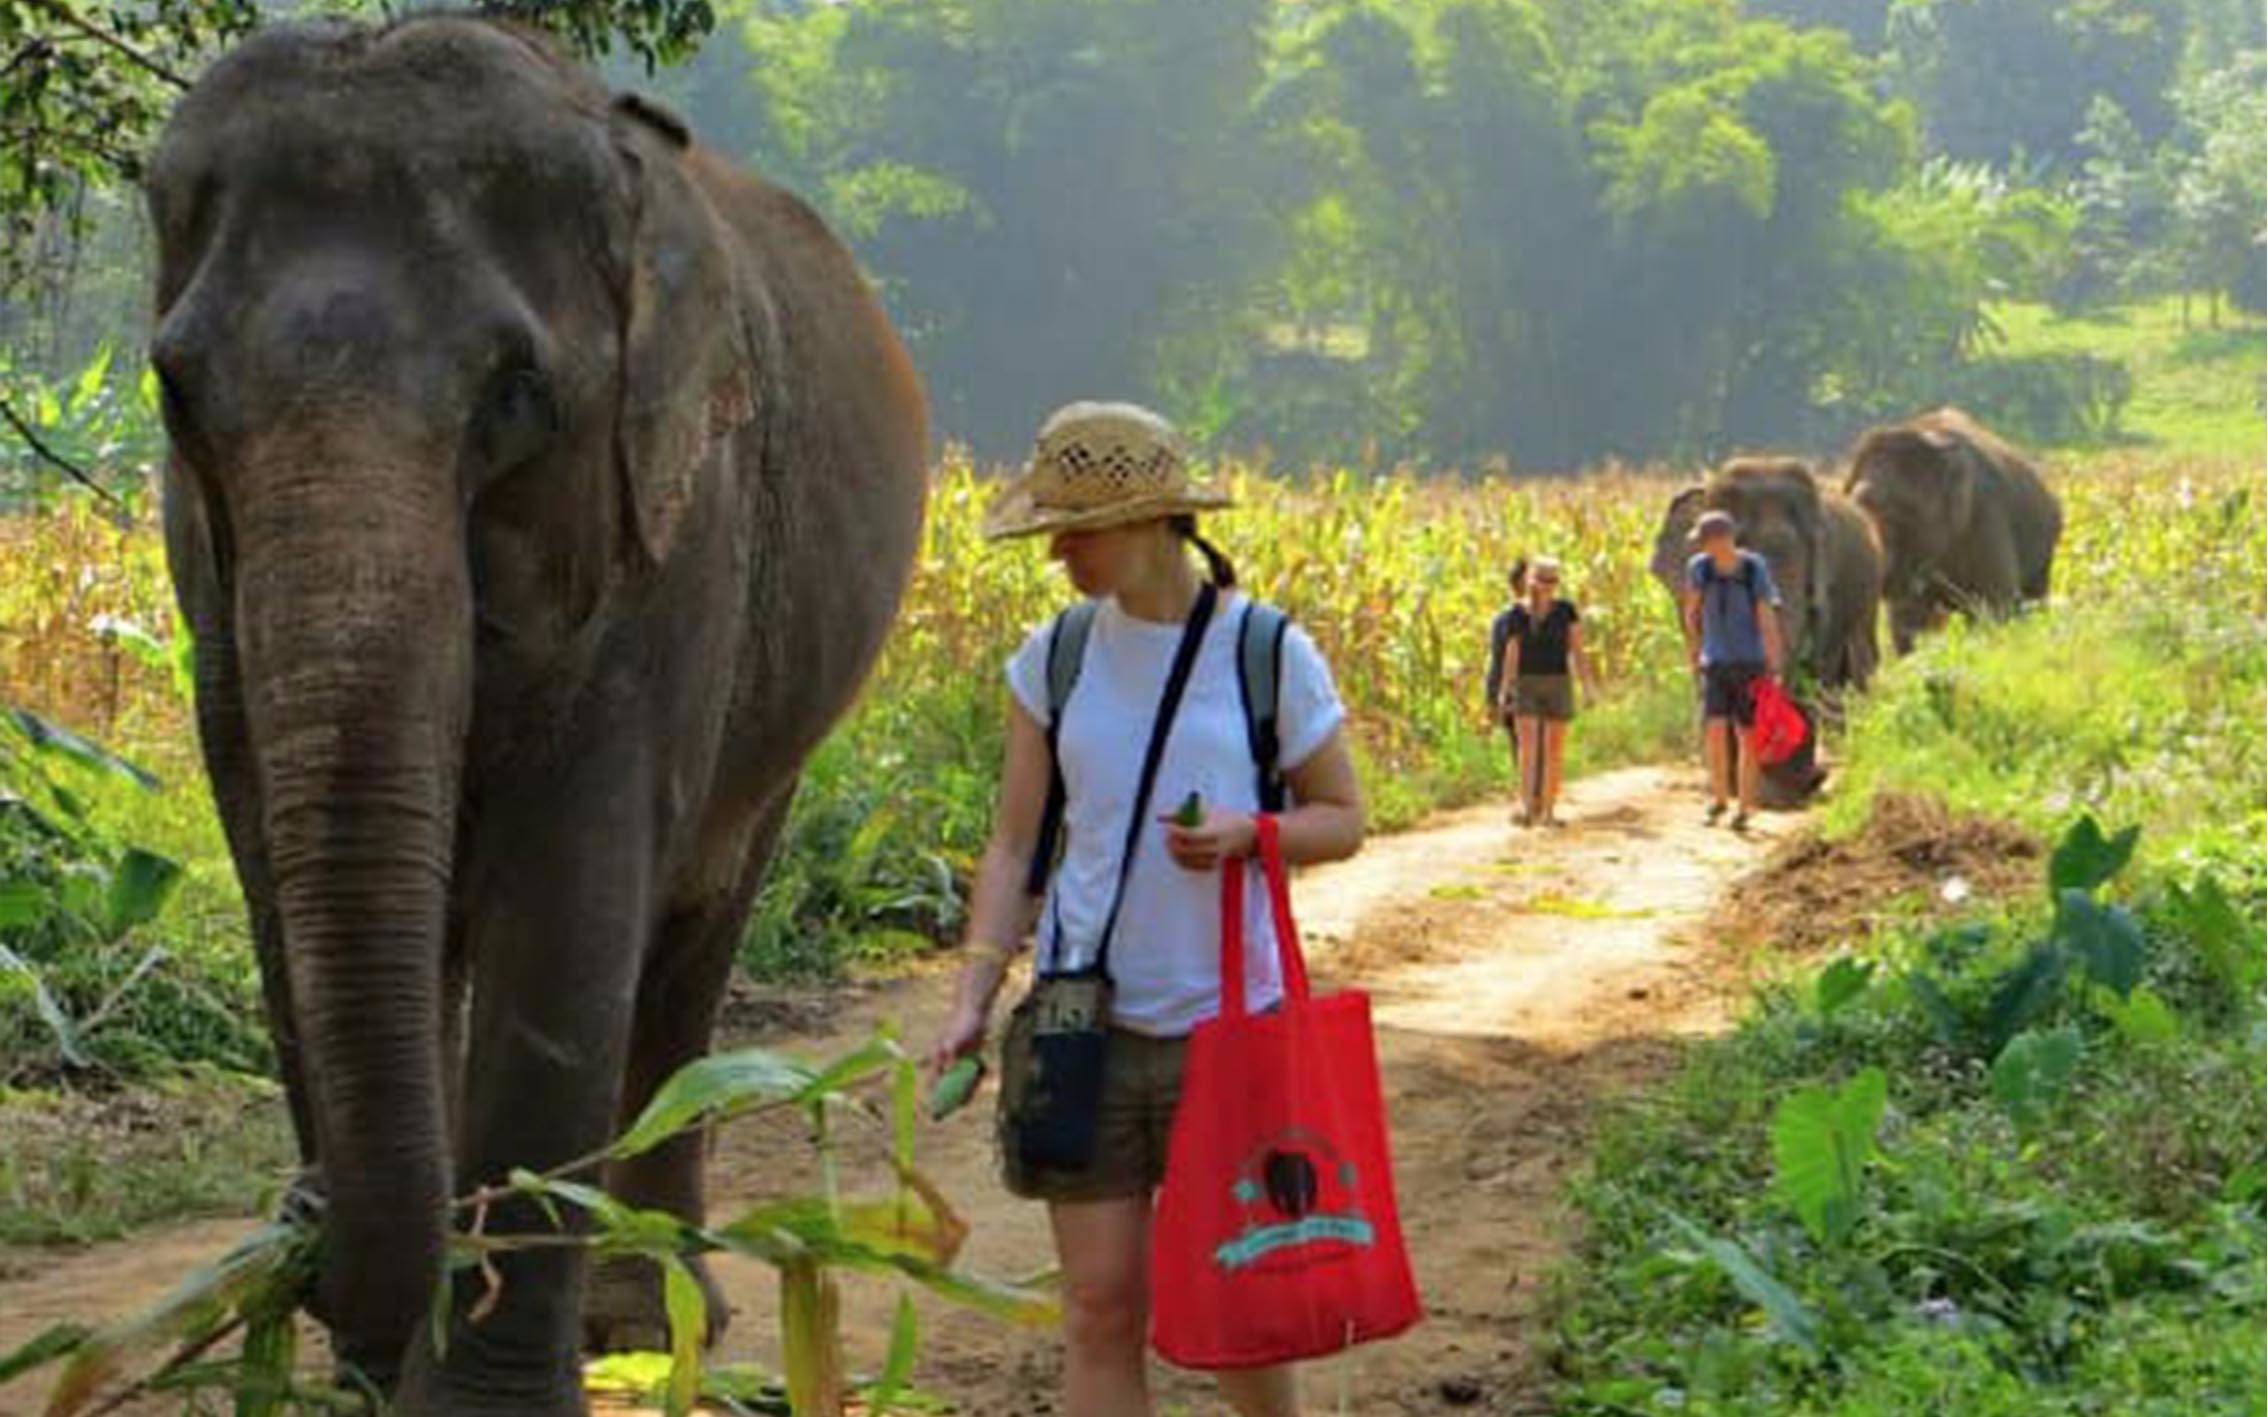 Trekking with elephants.